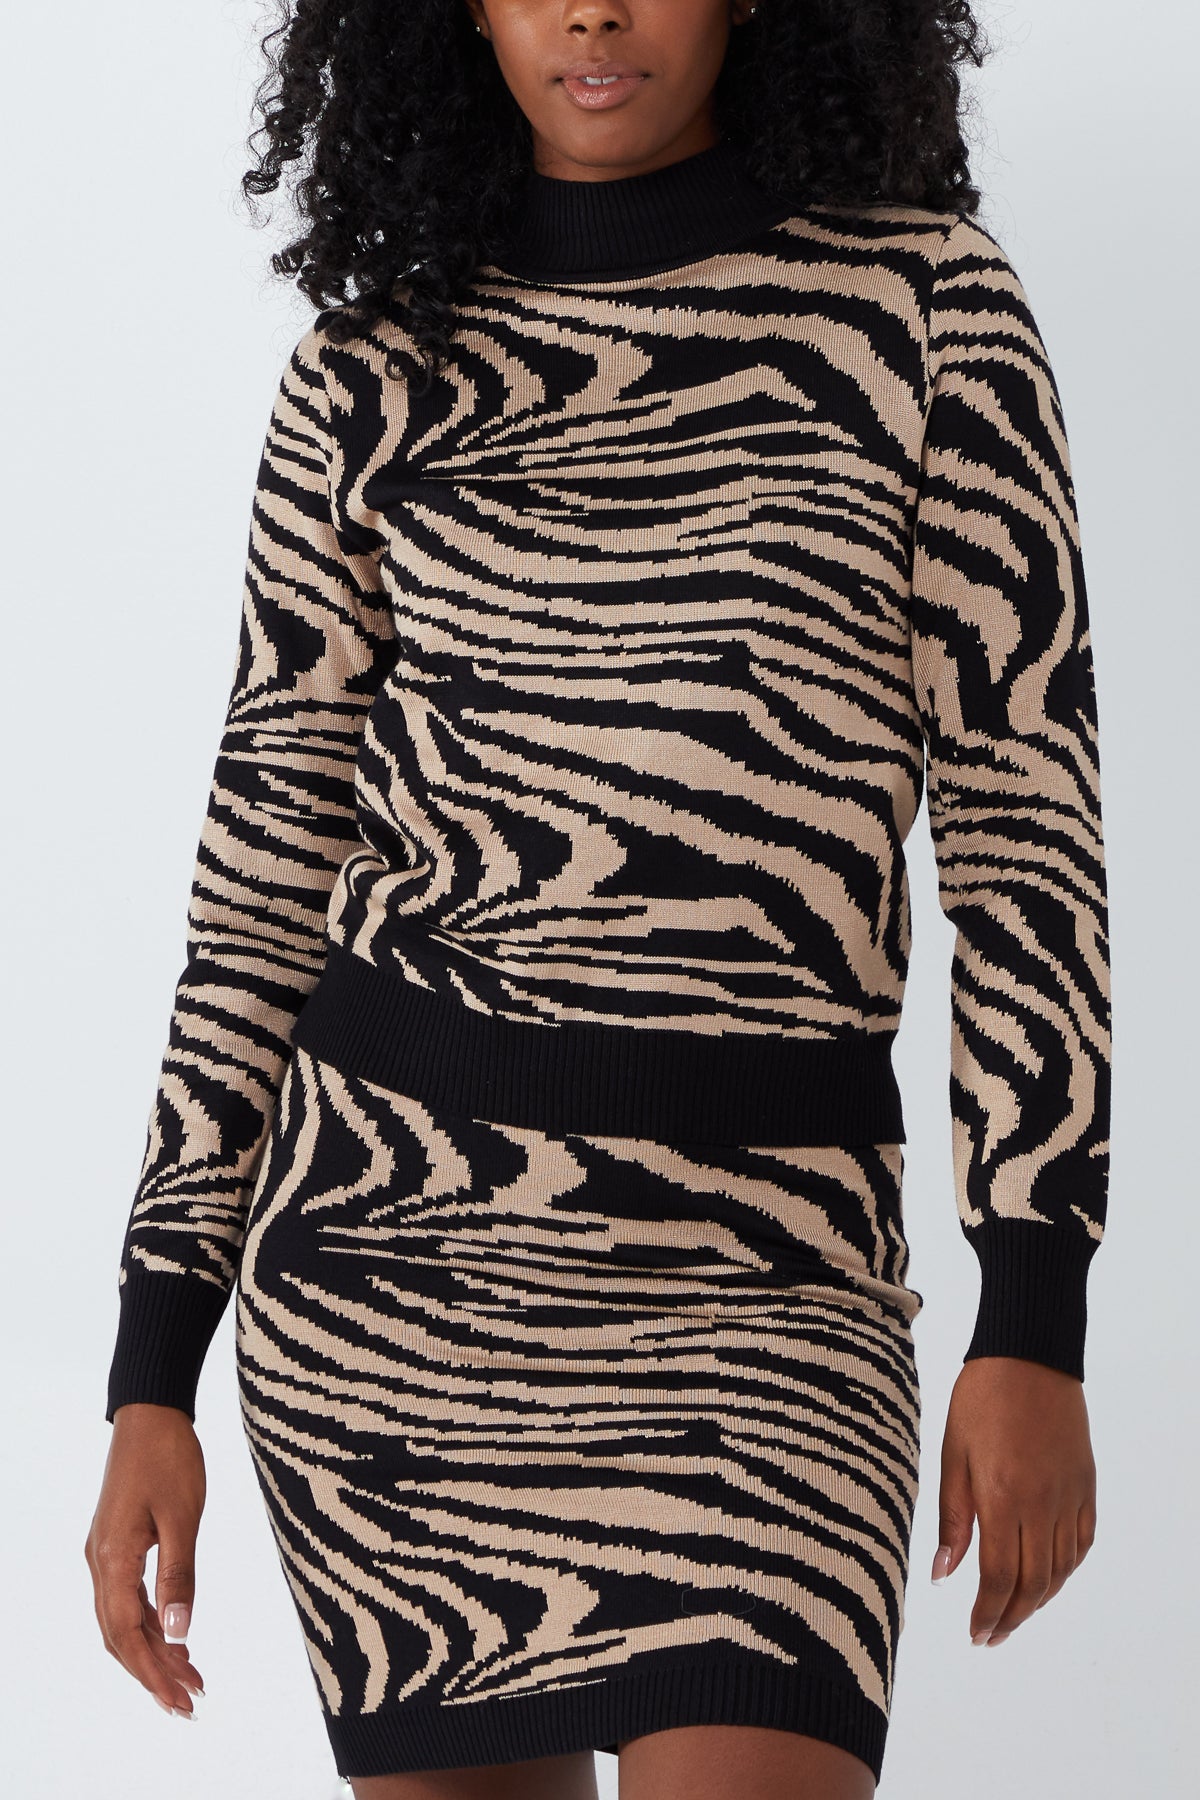 High Neck Zebra Knitted Top & Skirt Set